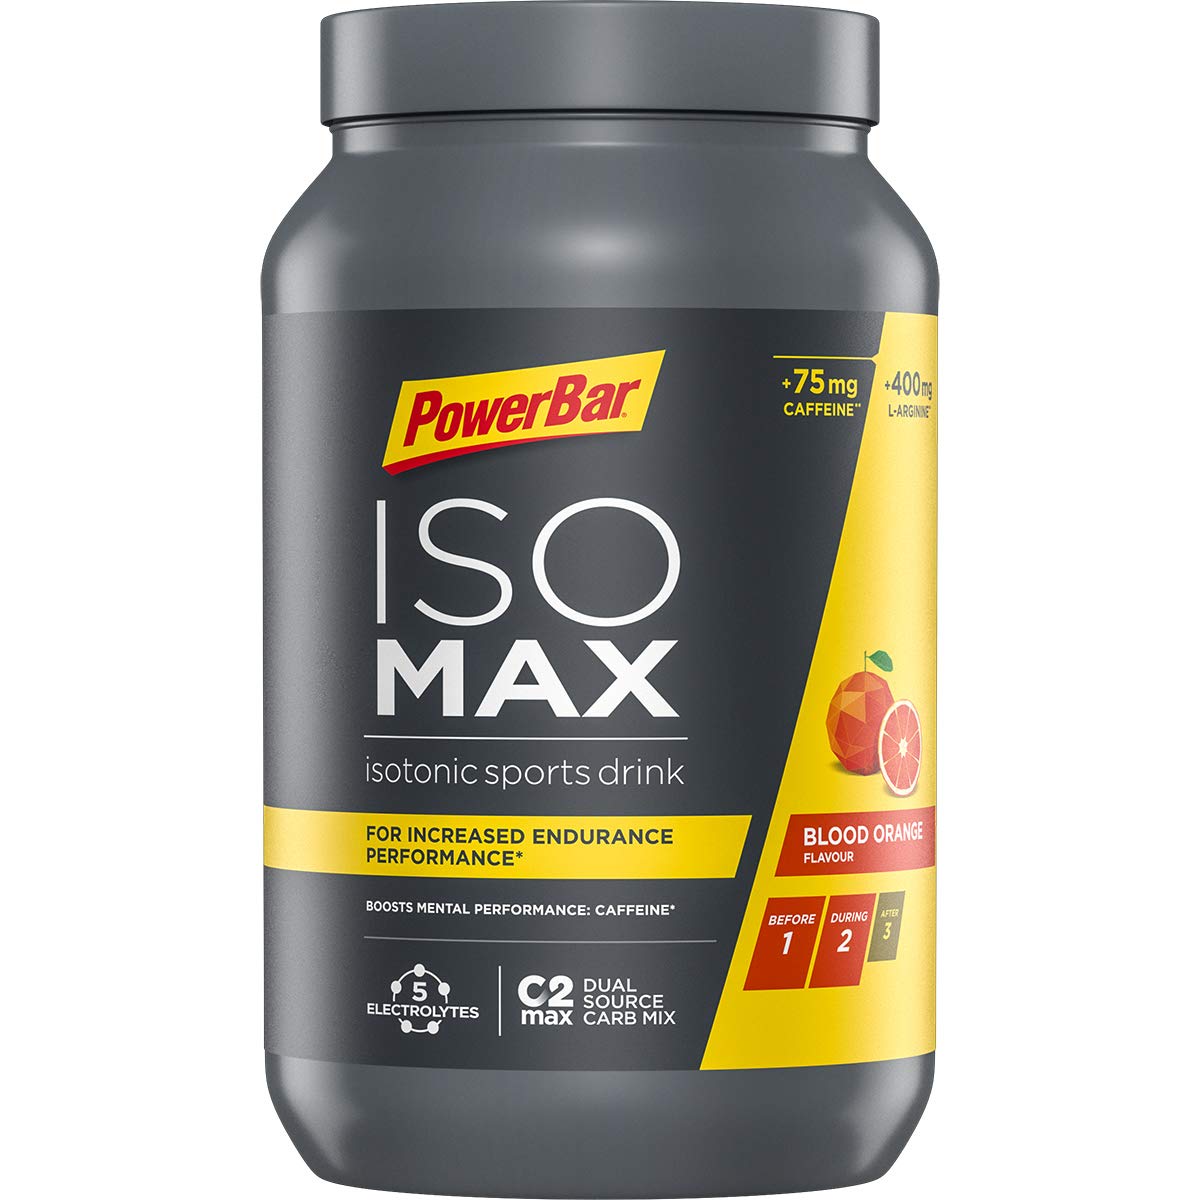 PowerBar - Isomax - Blood Orange - 1200g - Isotonisches Sportgetränk - 5 Elektrolyte - C2MAX - 75mg Koffein